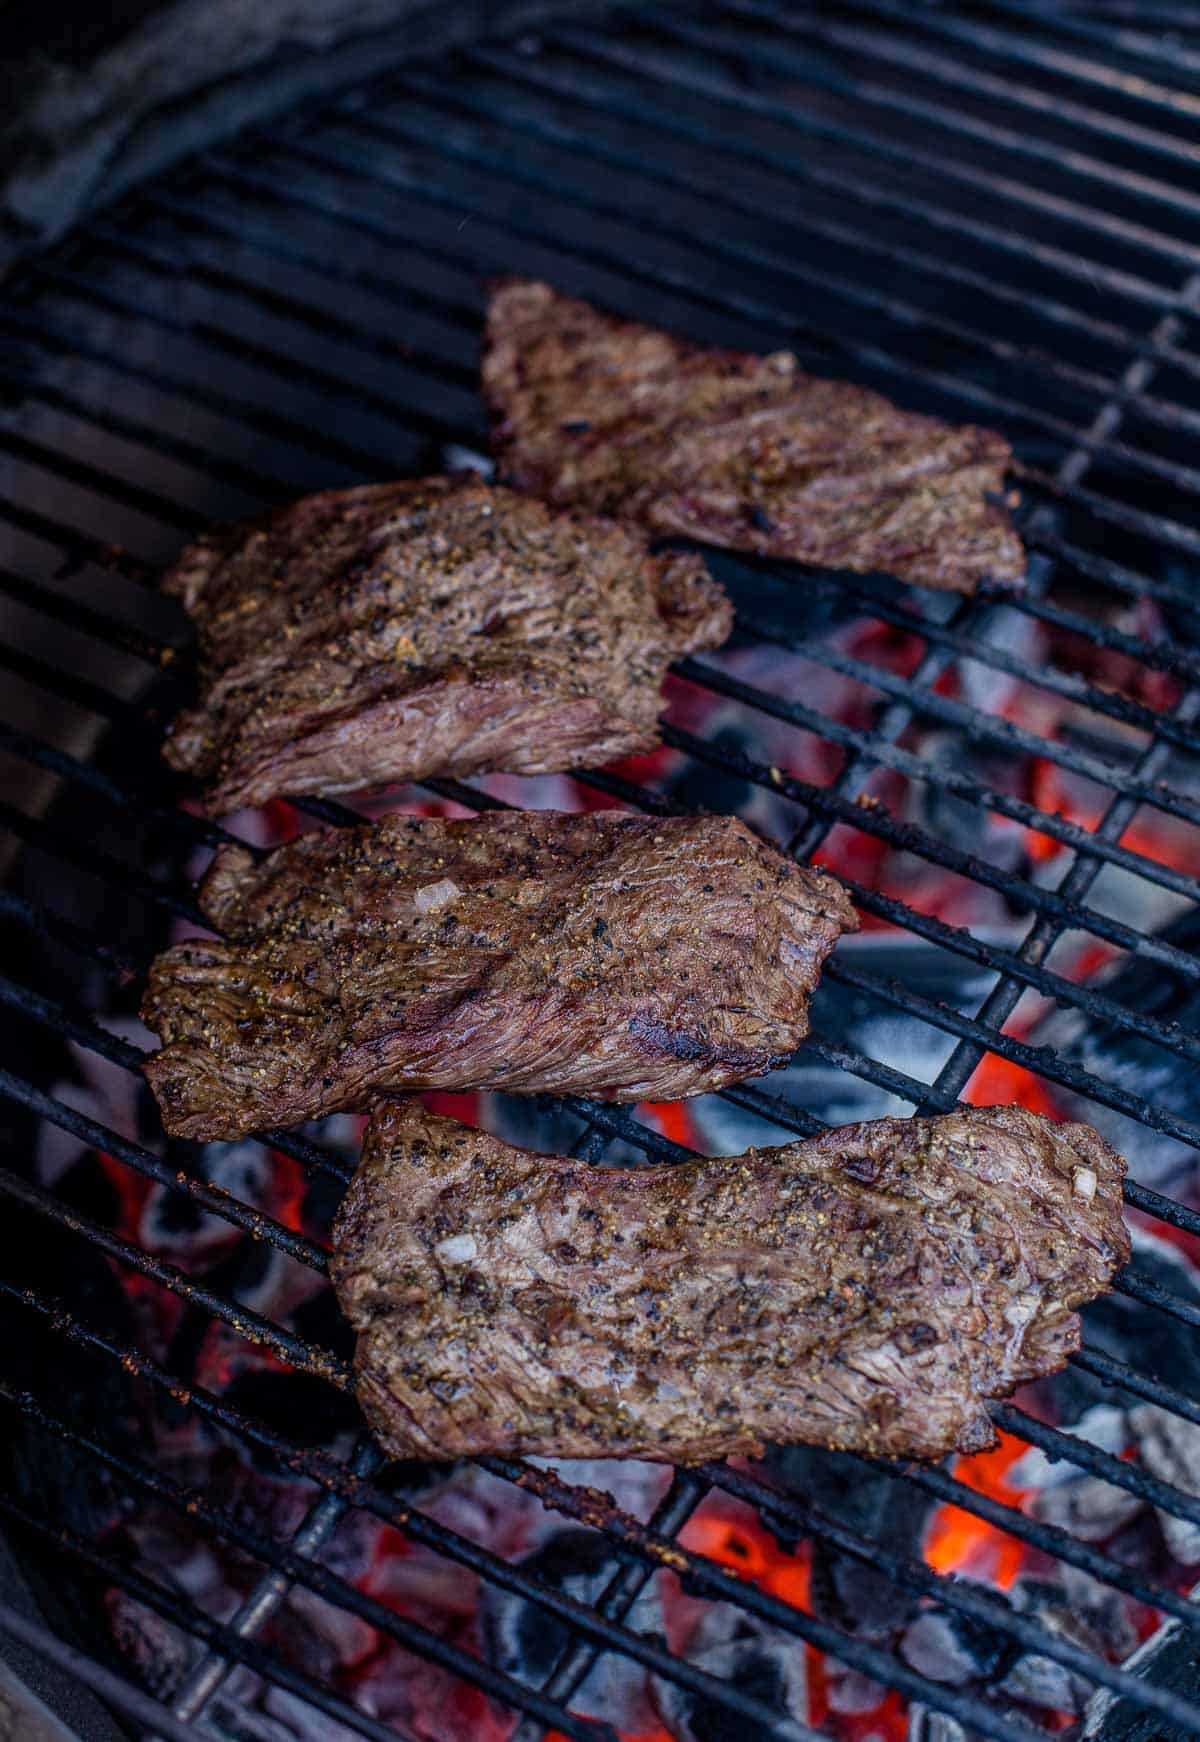 Bavette steak being grilled over direct heat.